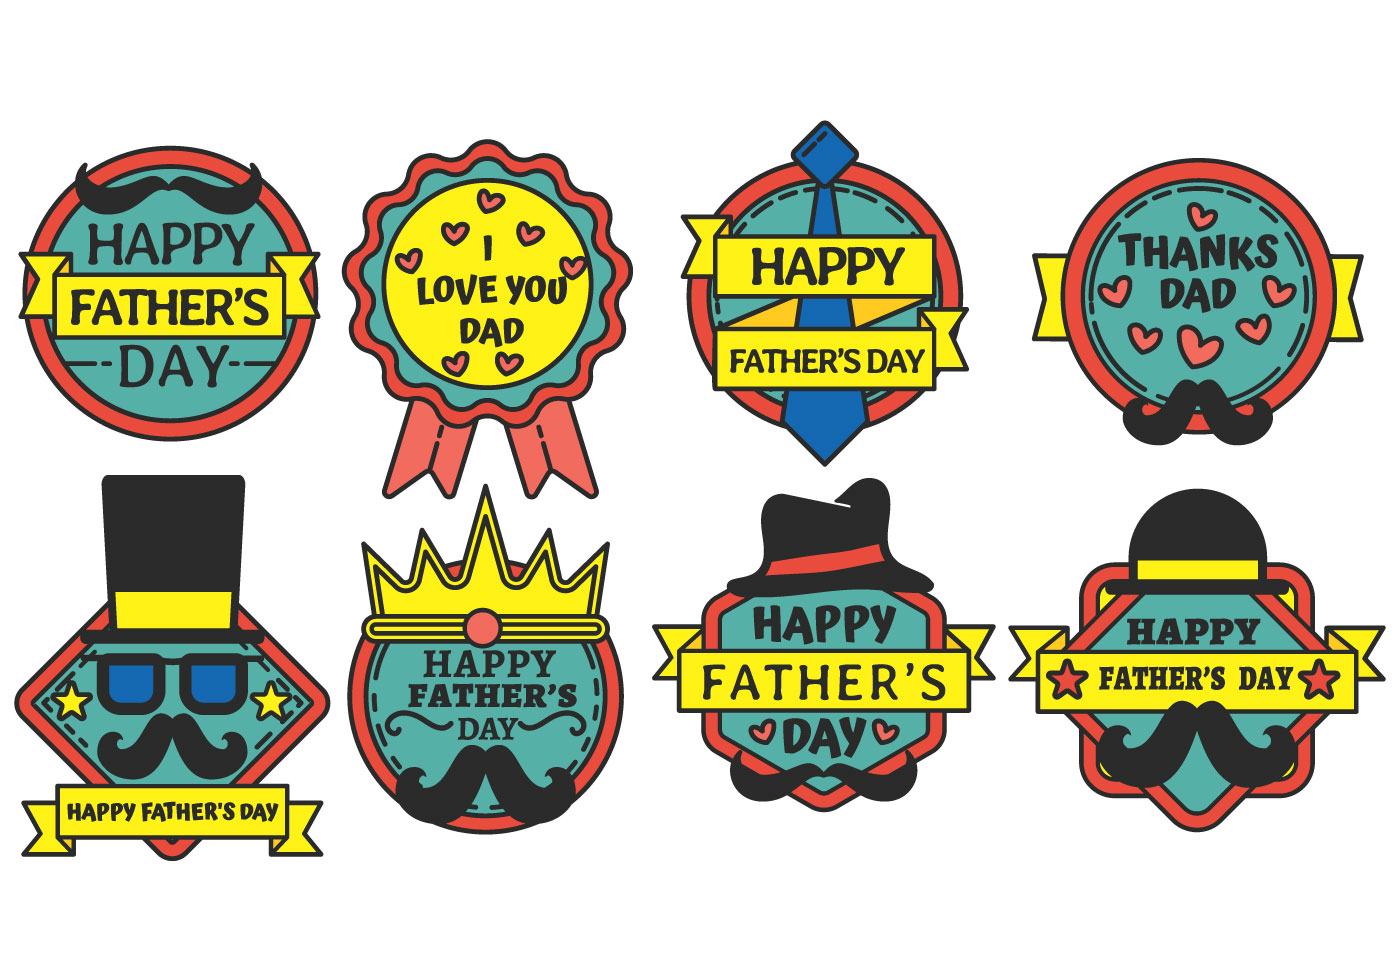 Download Happy Fathers day badge vector 206798 - Download Free Vectors, Clipart Graphics & Vector Art